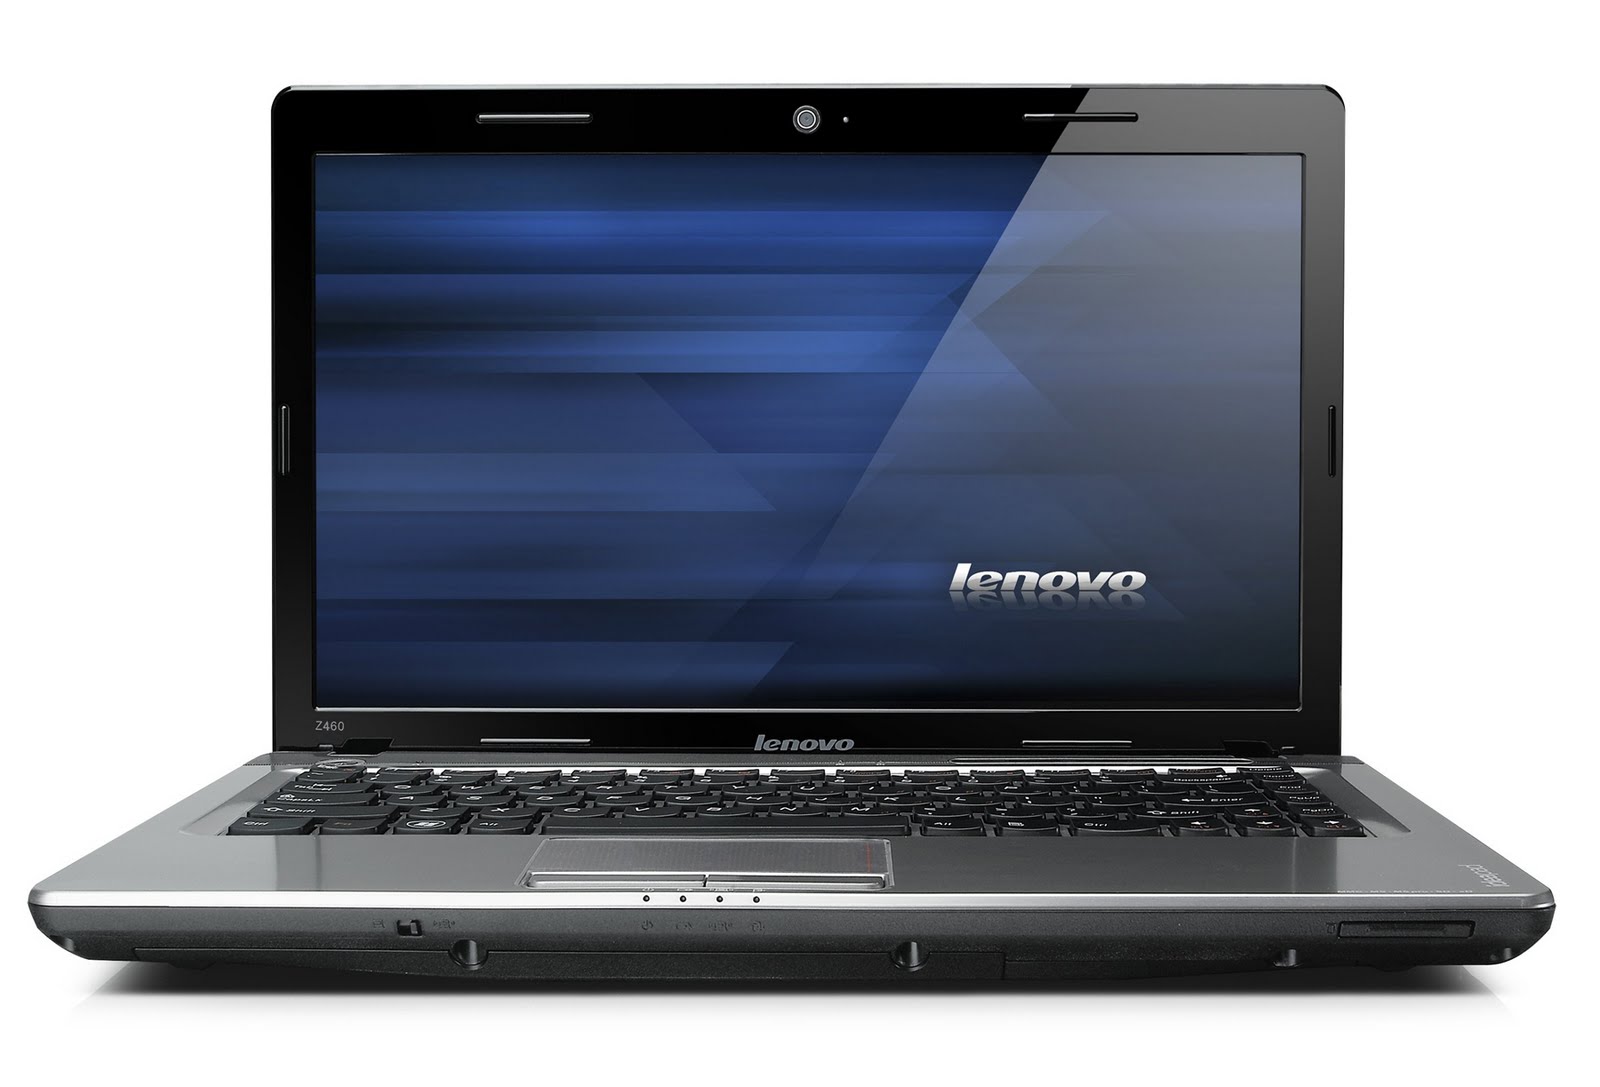 Daftar Harga Laptop Notebook Lenovo September 2013 | Seo Edan